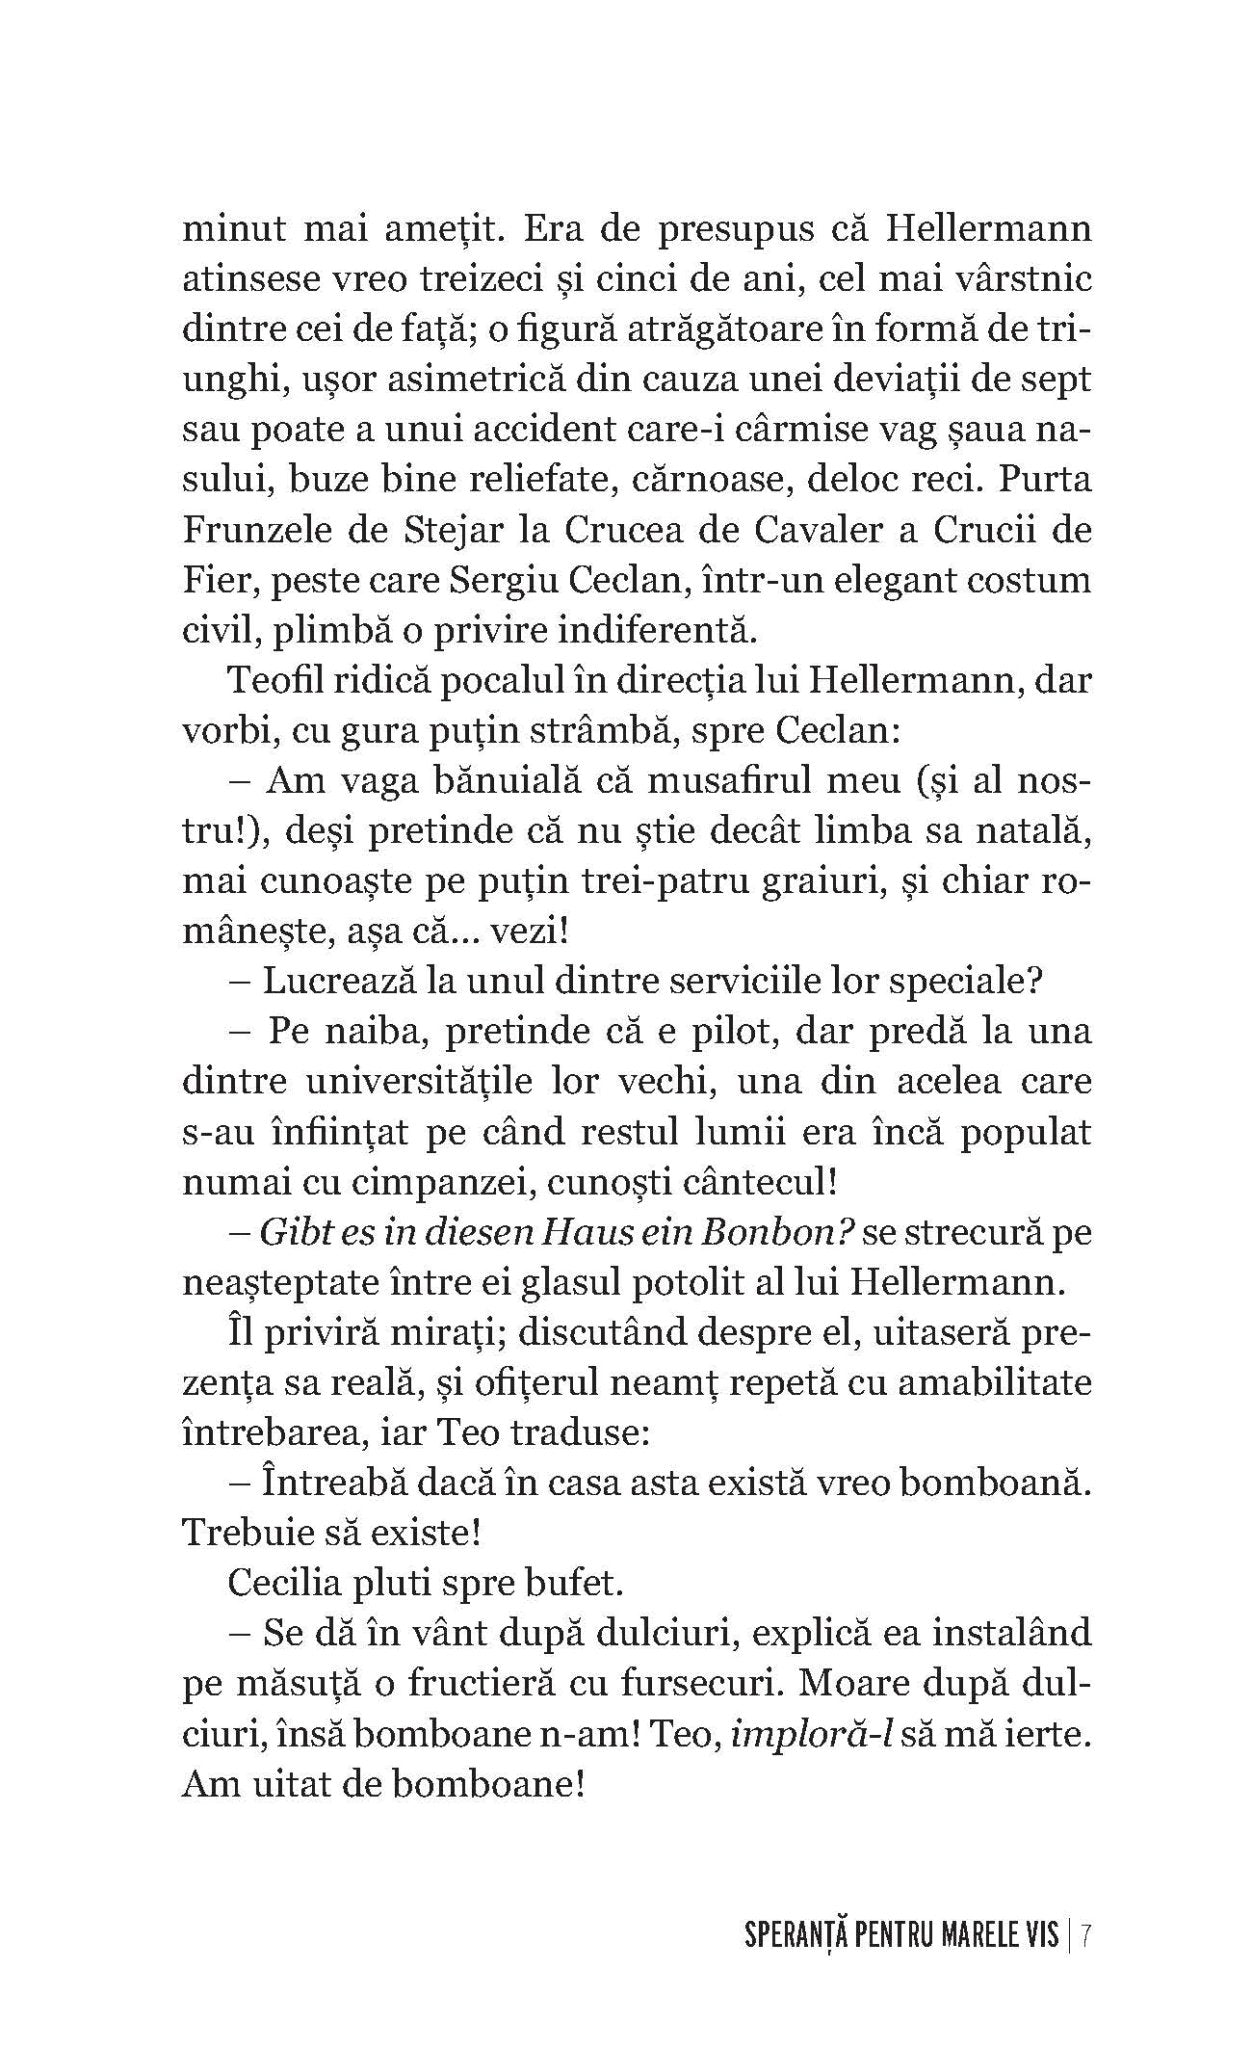 Speranta Pentru Marele Vis - Ed. digital - PDF - Publisol.ro